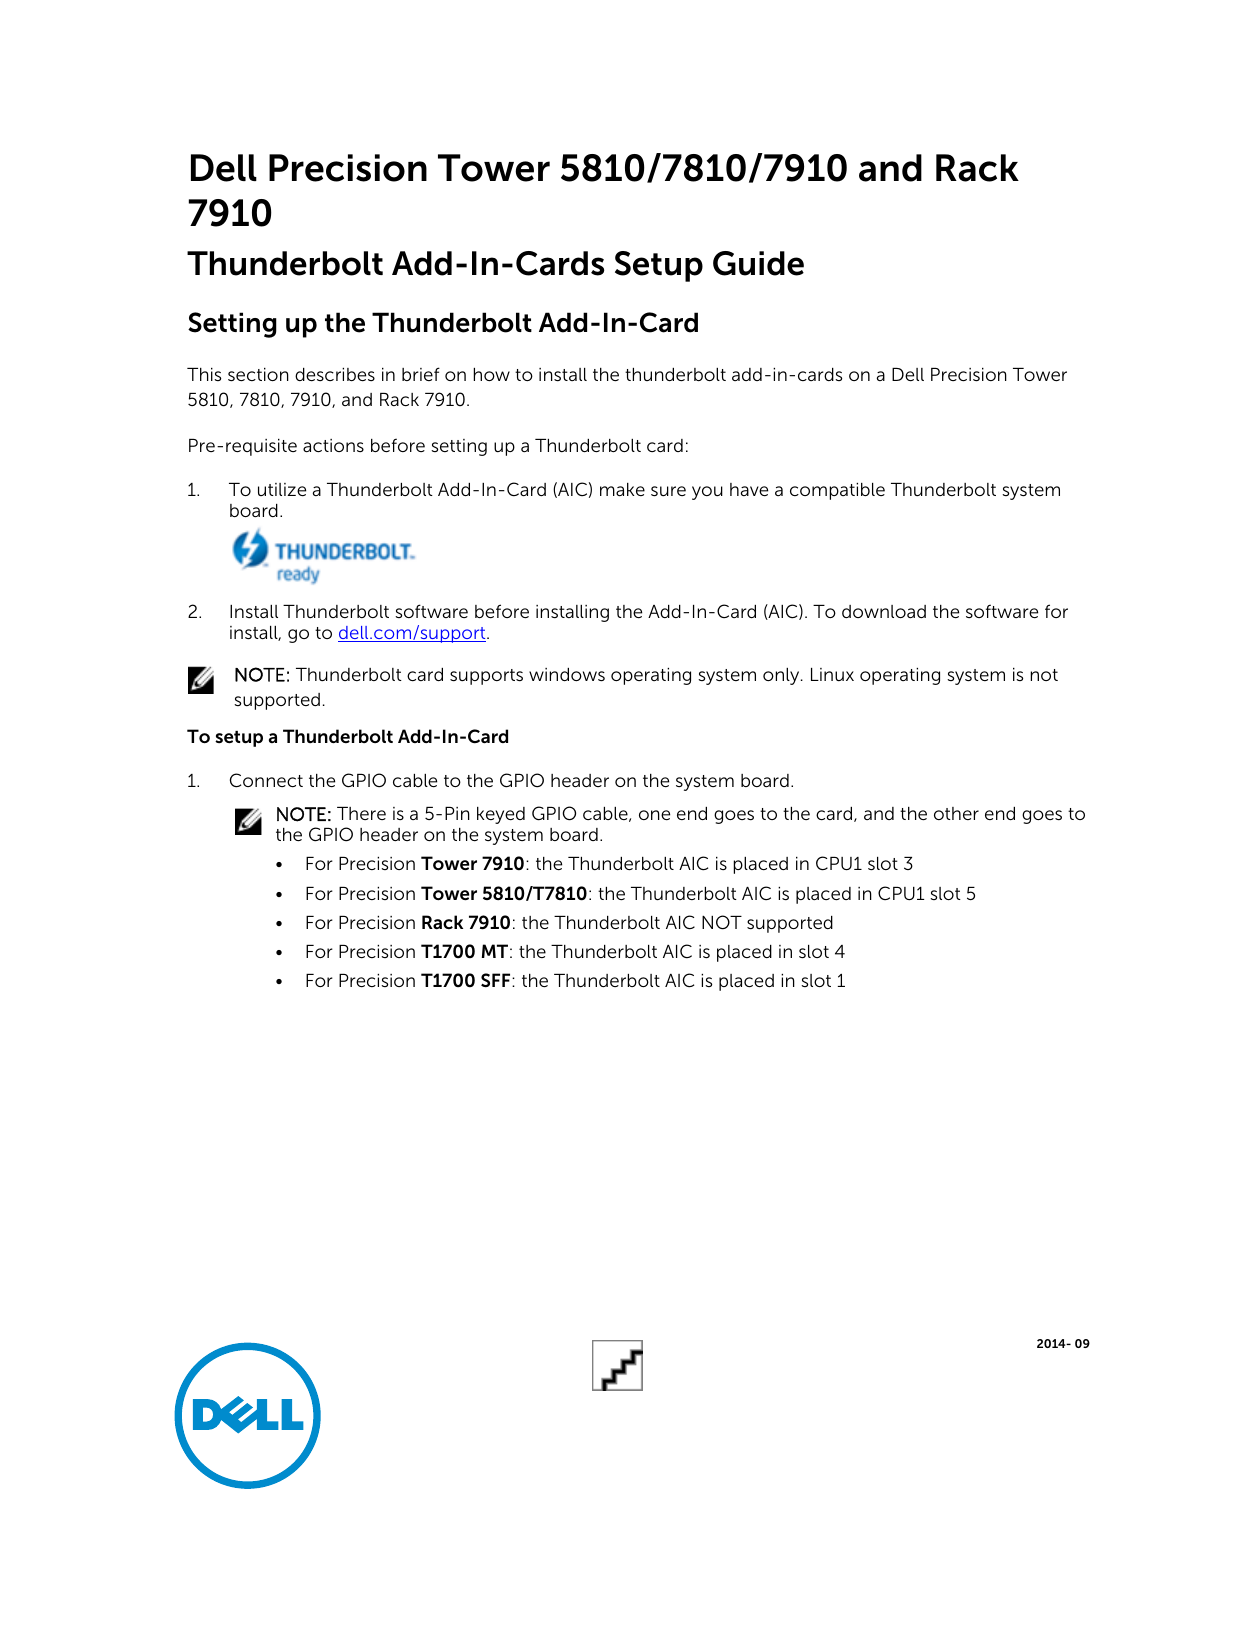 Dell Crib Toy 5810 User Manual Manualzz